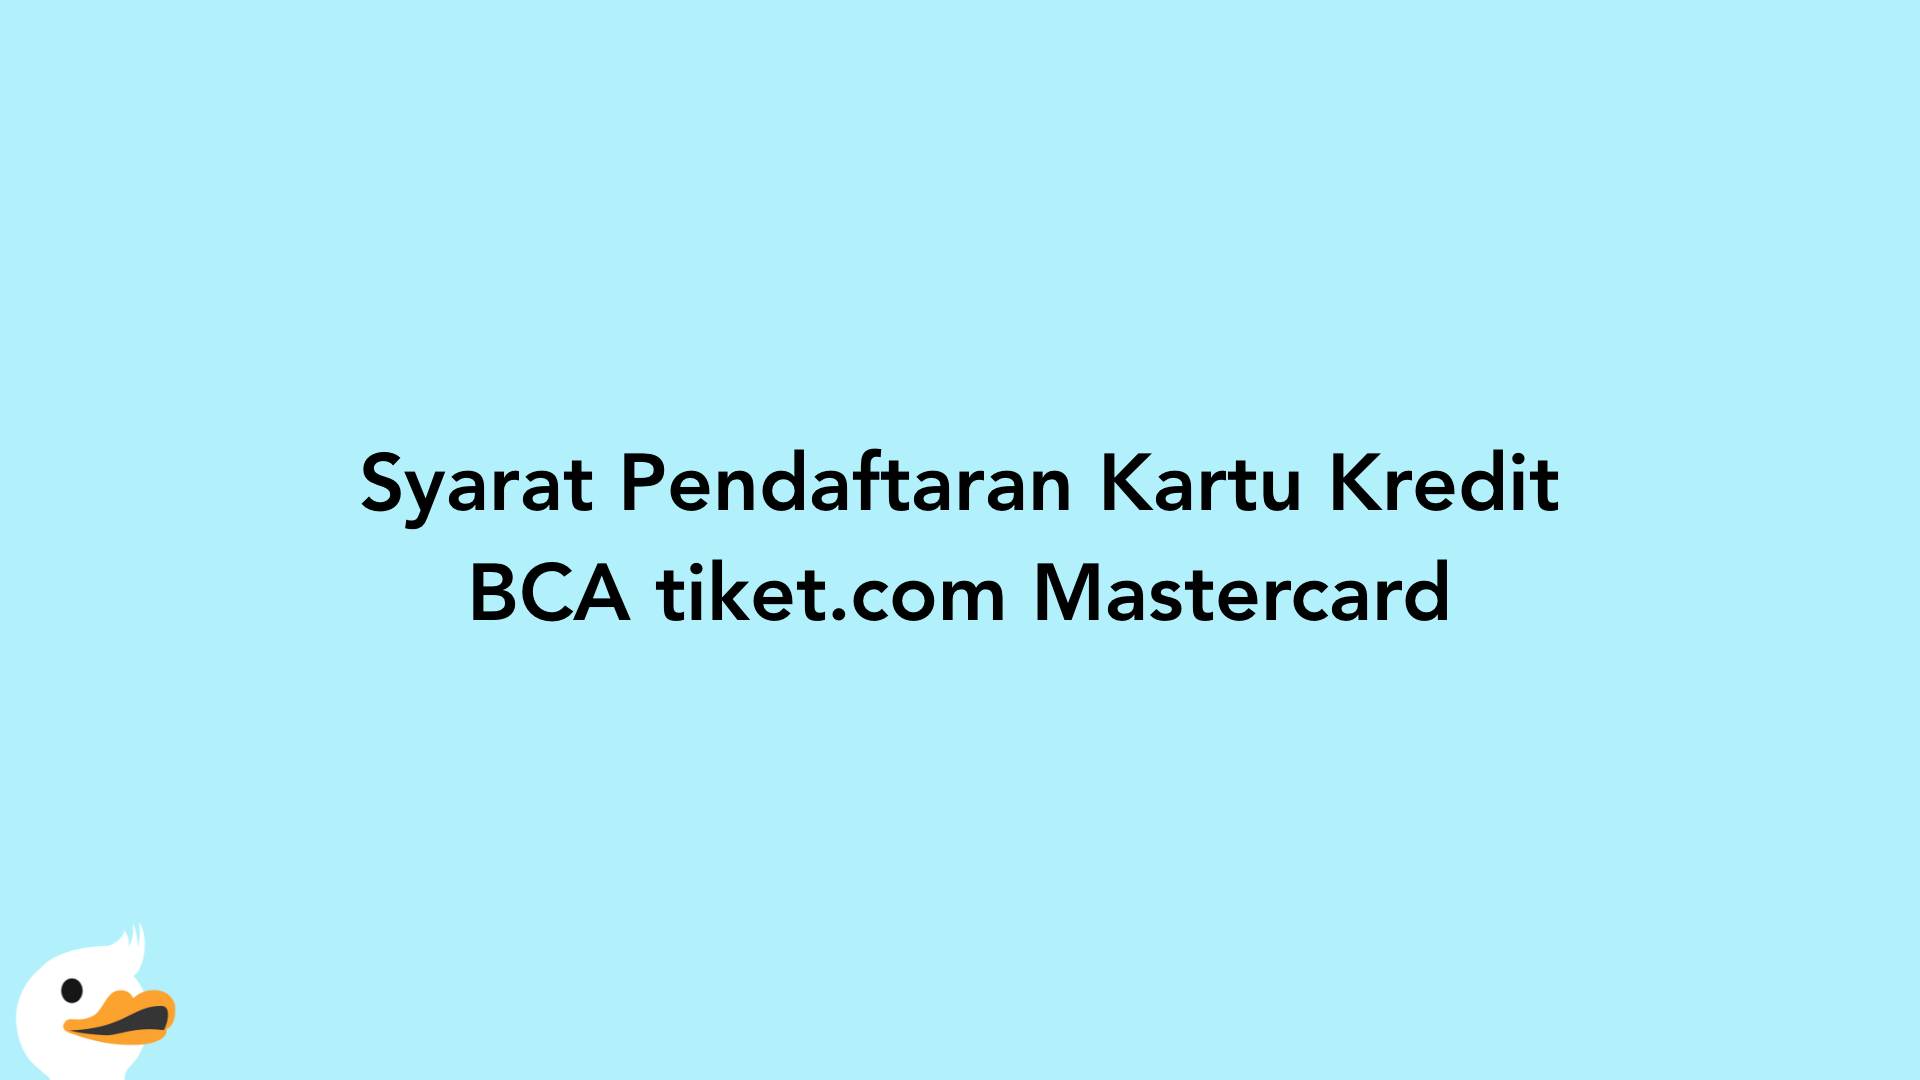 Syarat Pendaftaran Kartu Kredit BCA tiket.com Mastercard